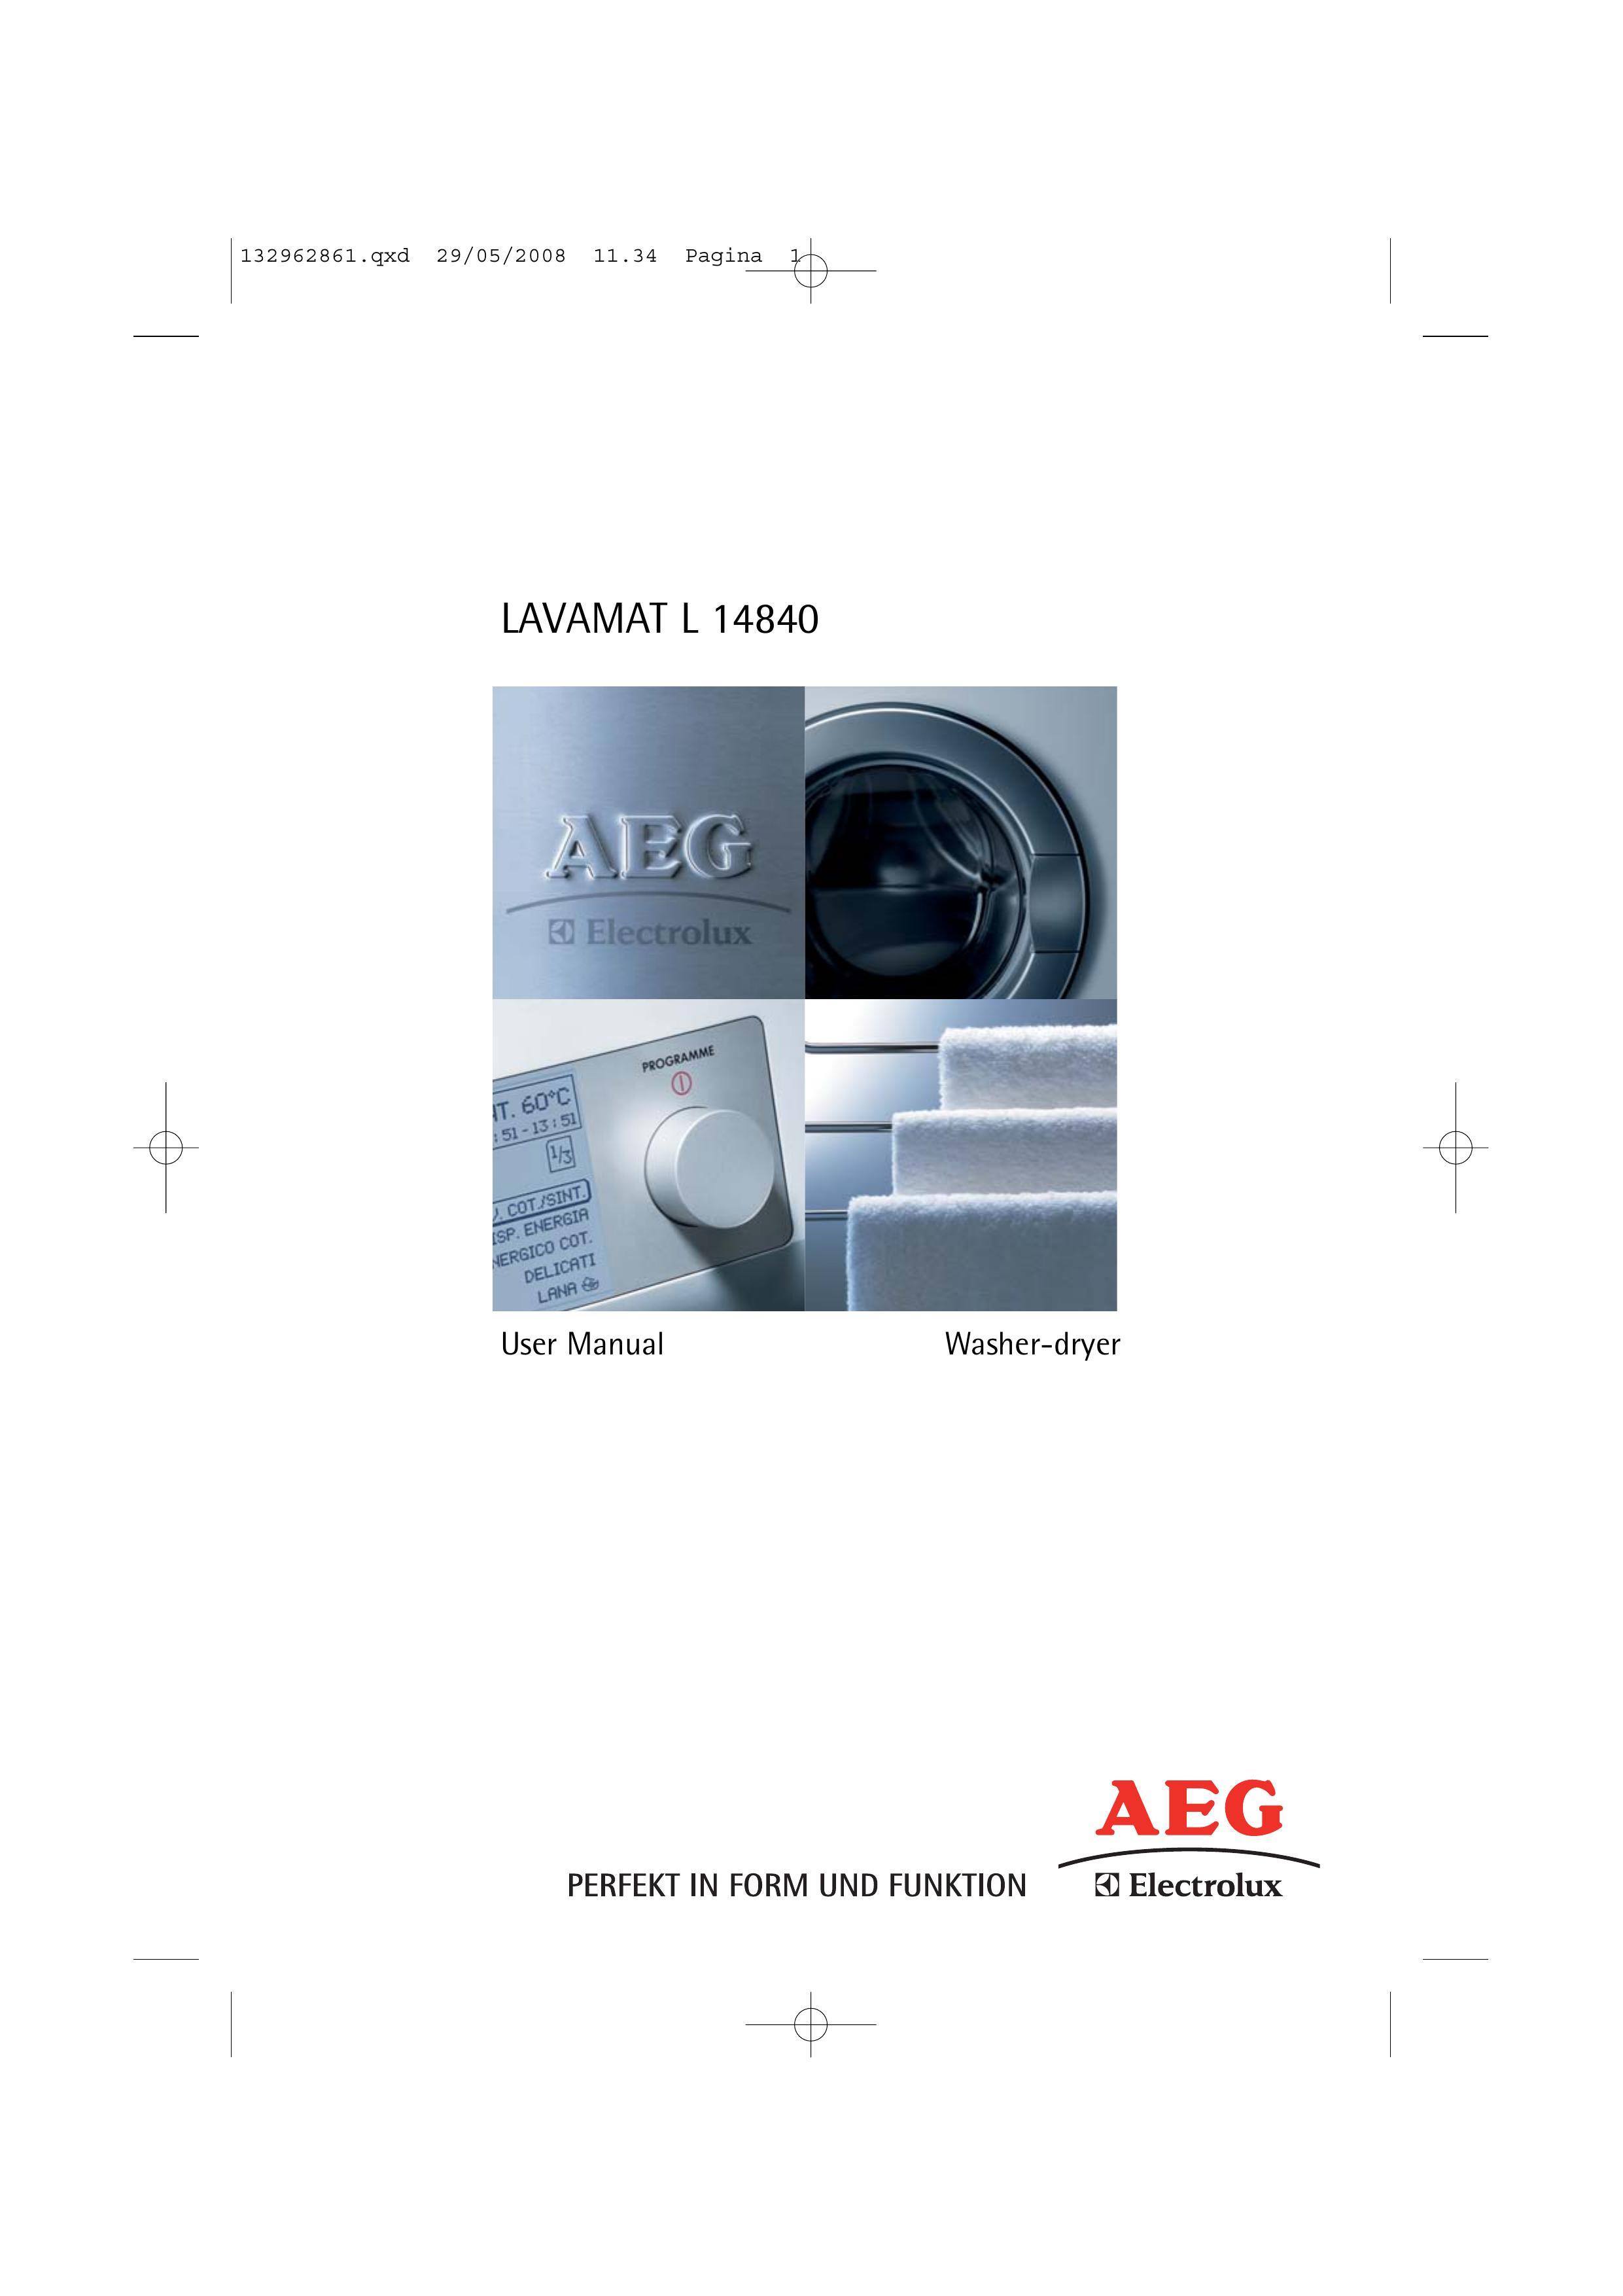 AEG L 14840 Washer/Dryer User Manual